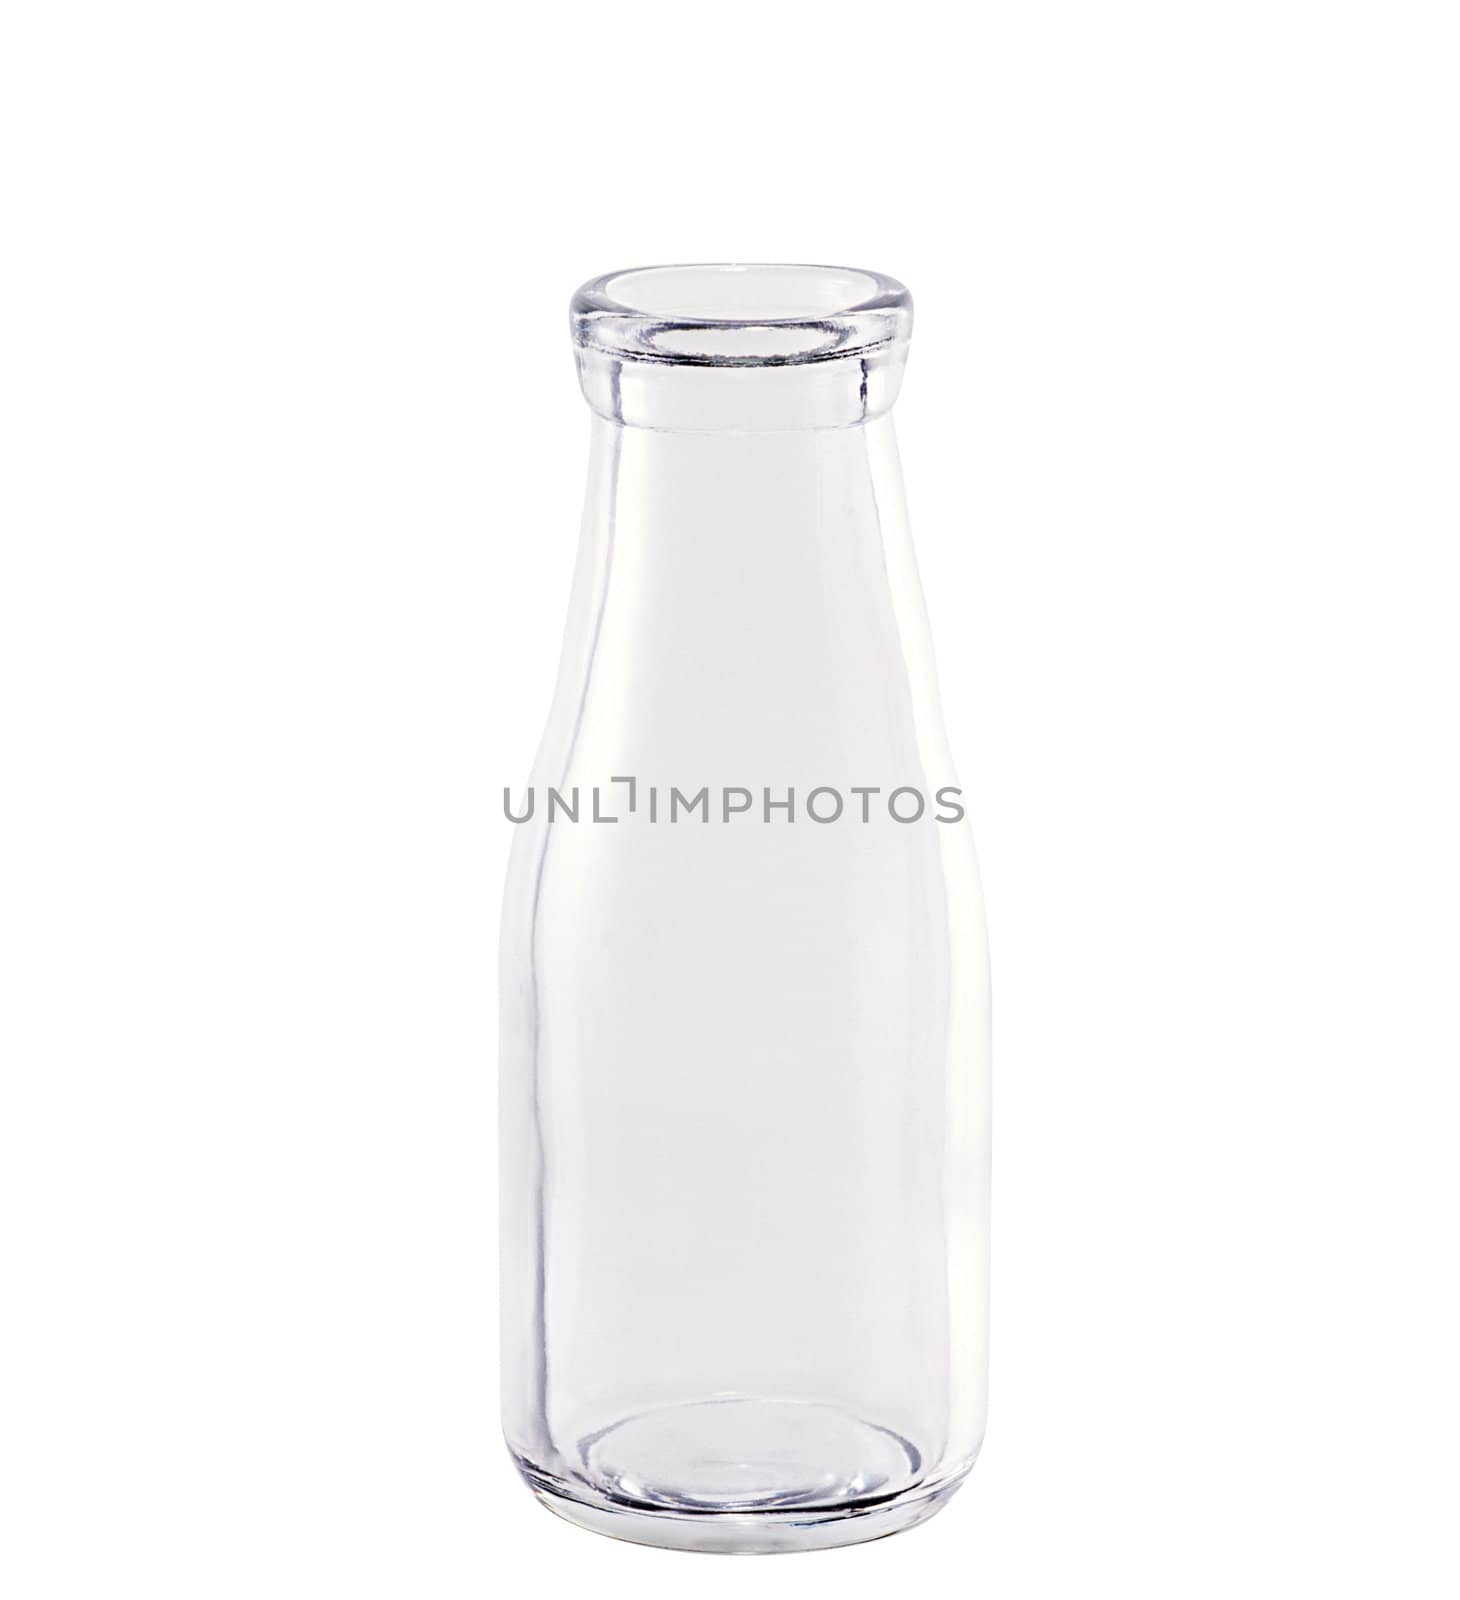 Empty Milk bottle isolated by ozaiachin